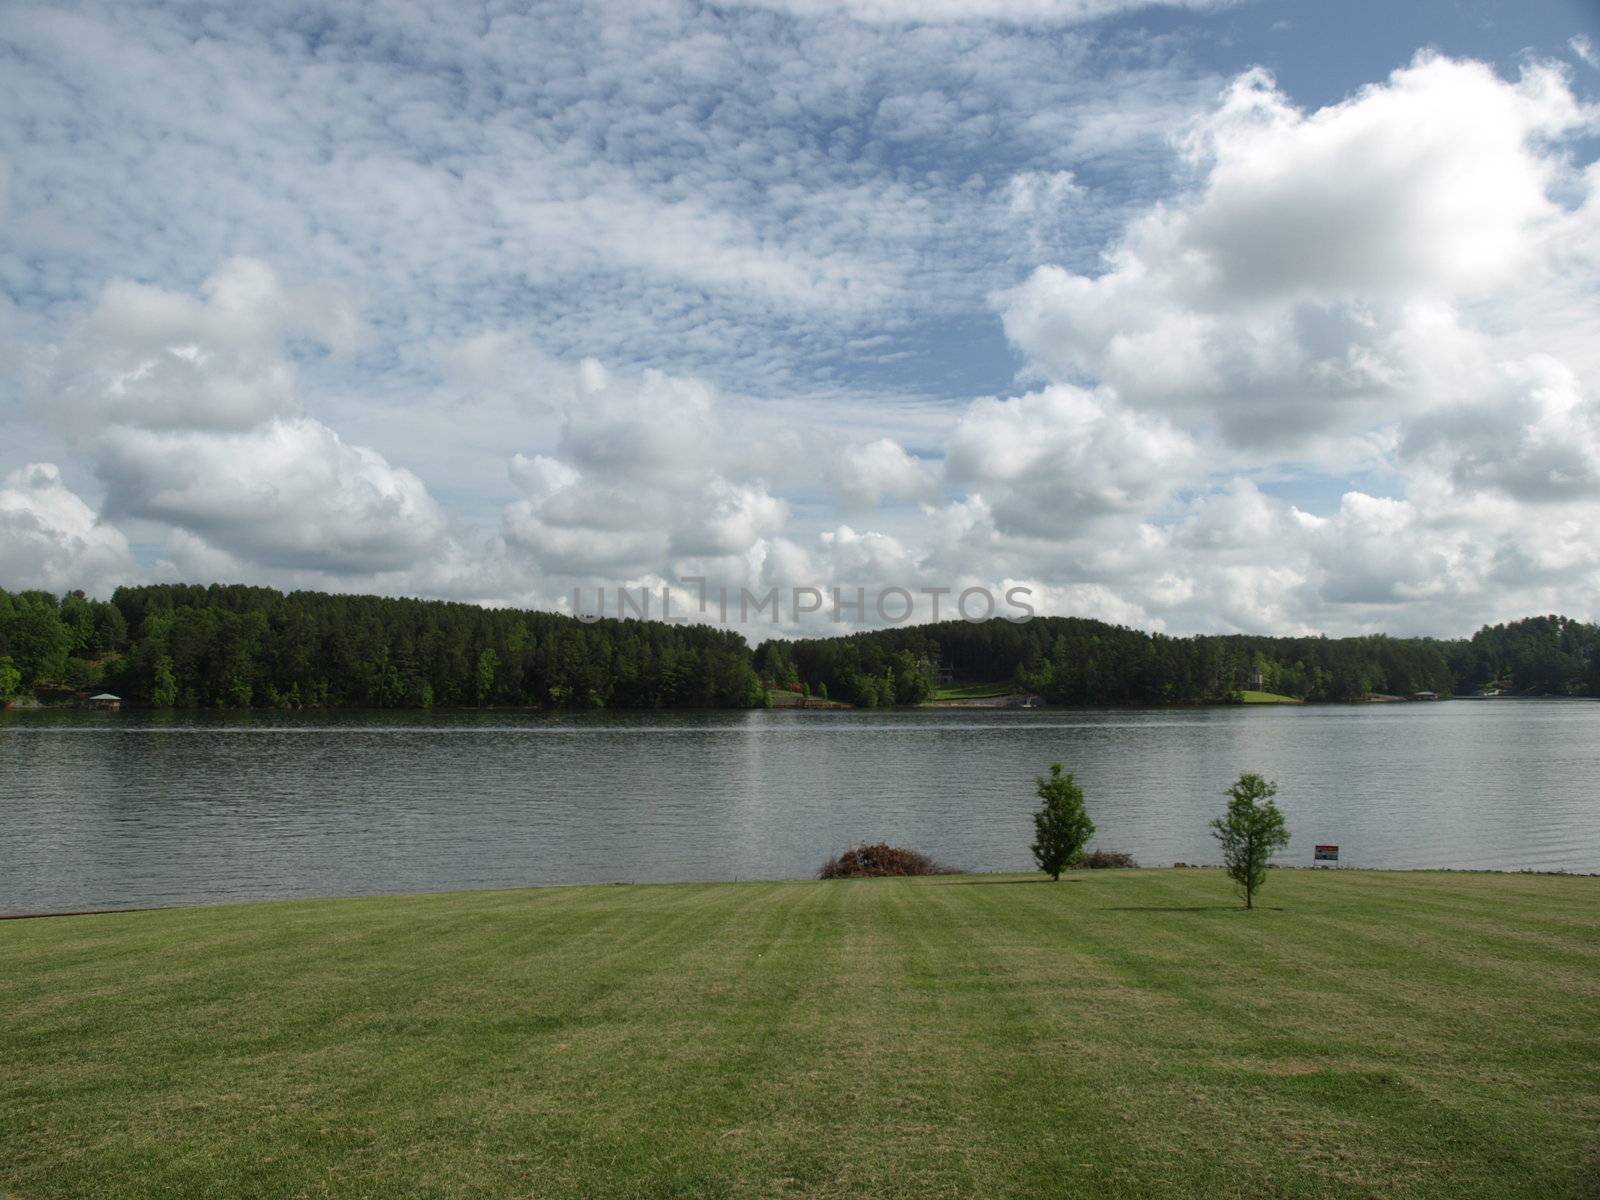 A view of lake Hickory in North Carolina